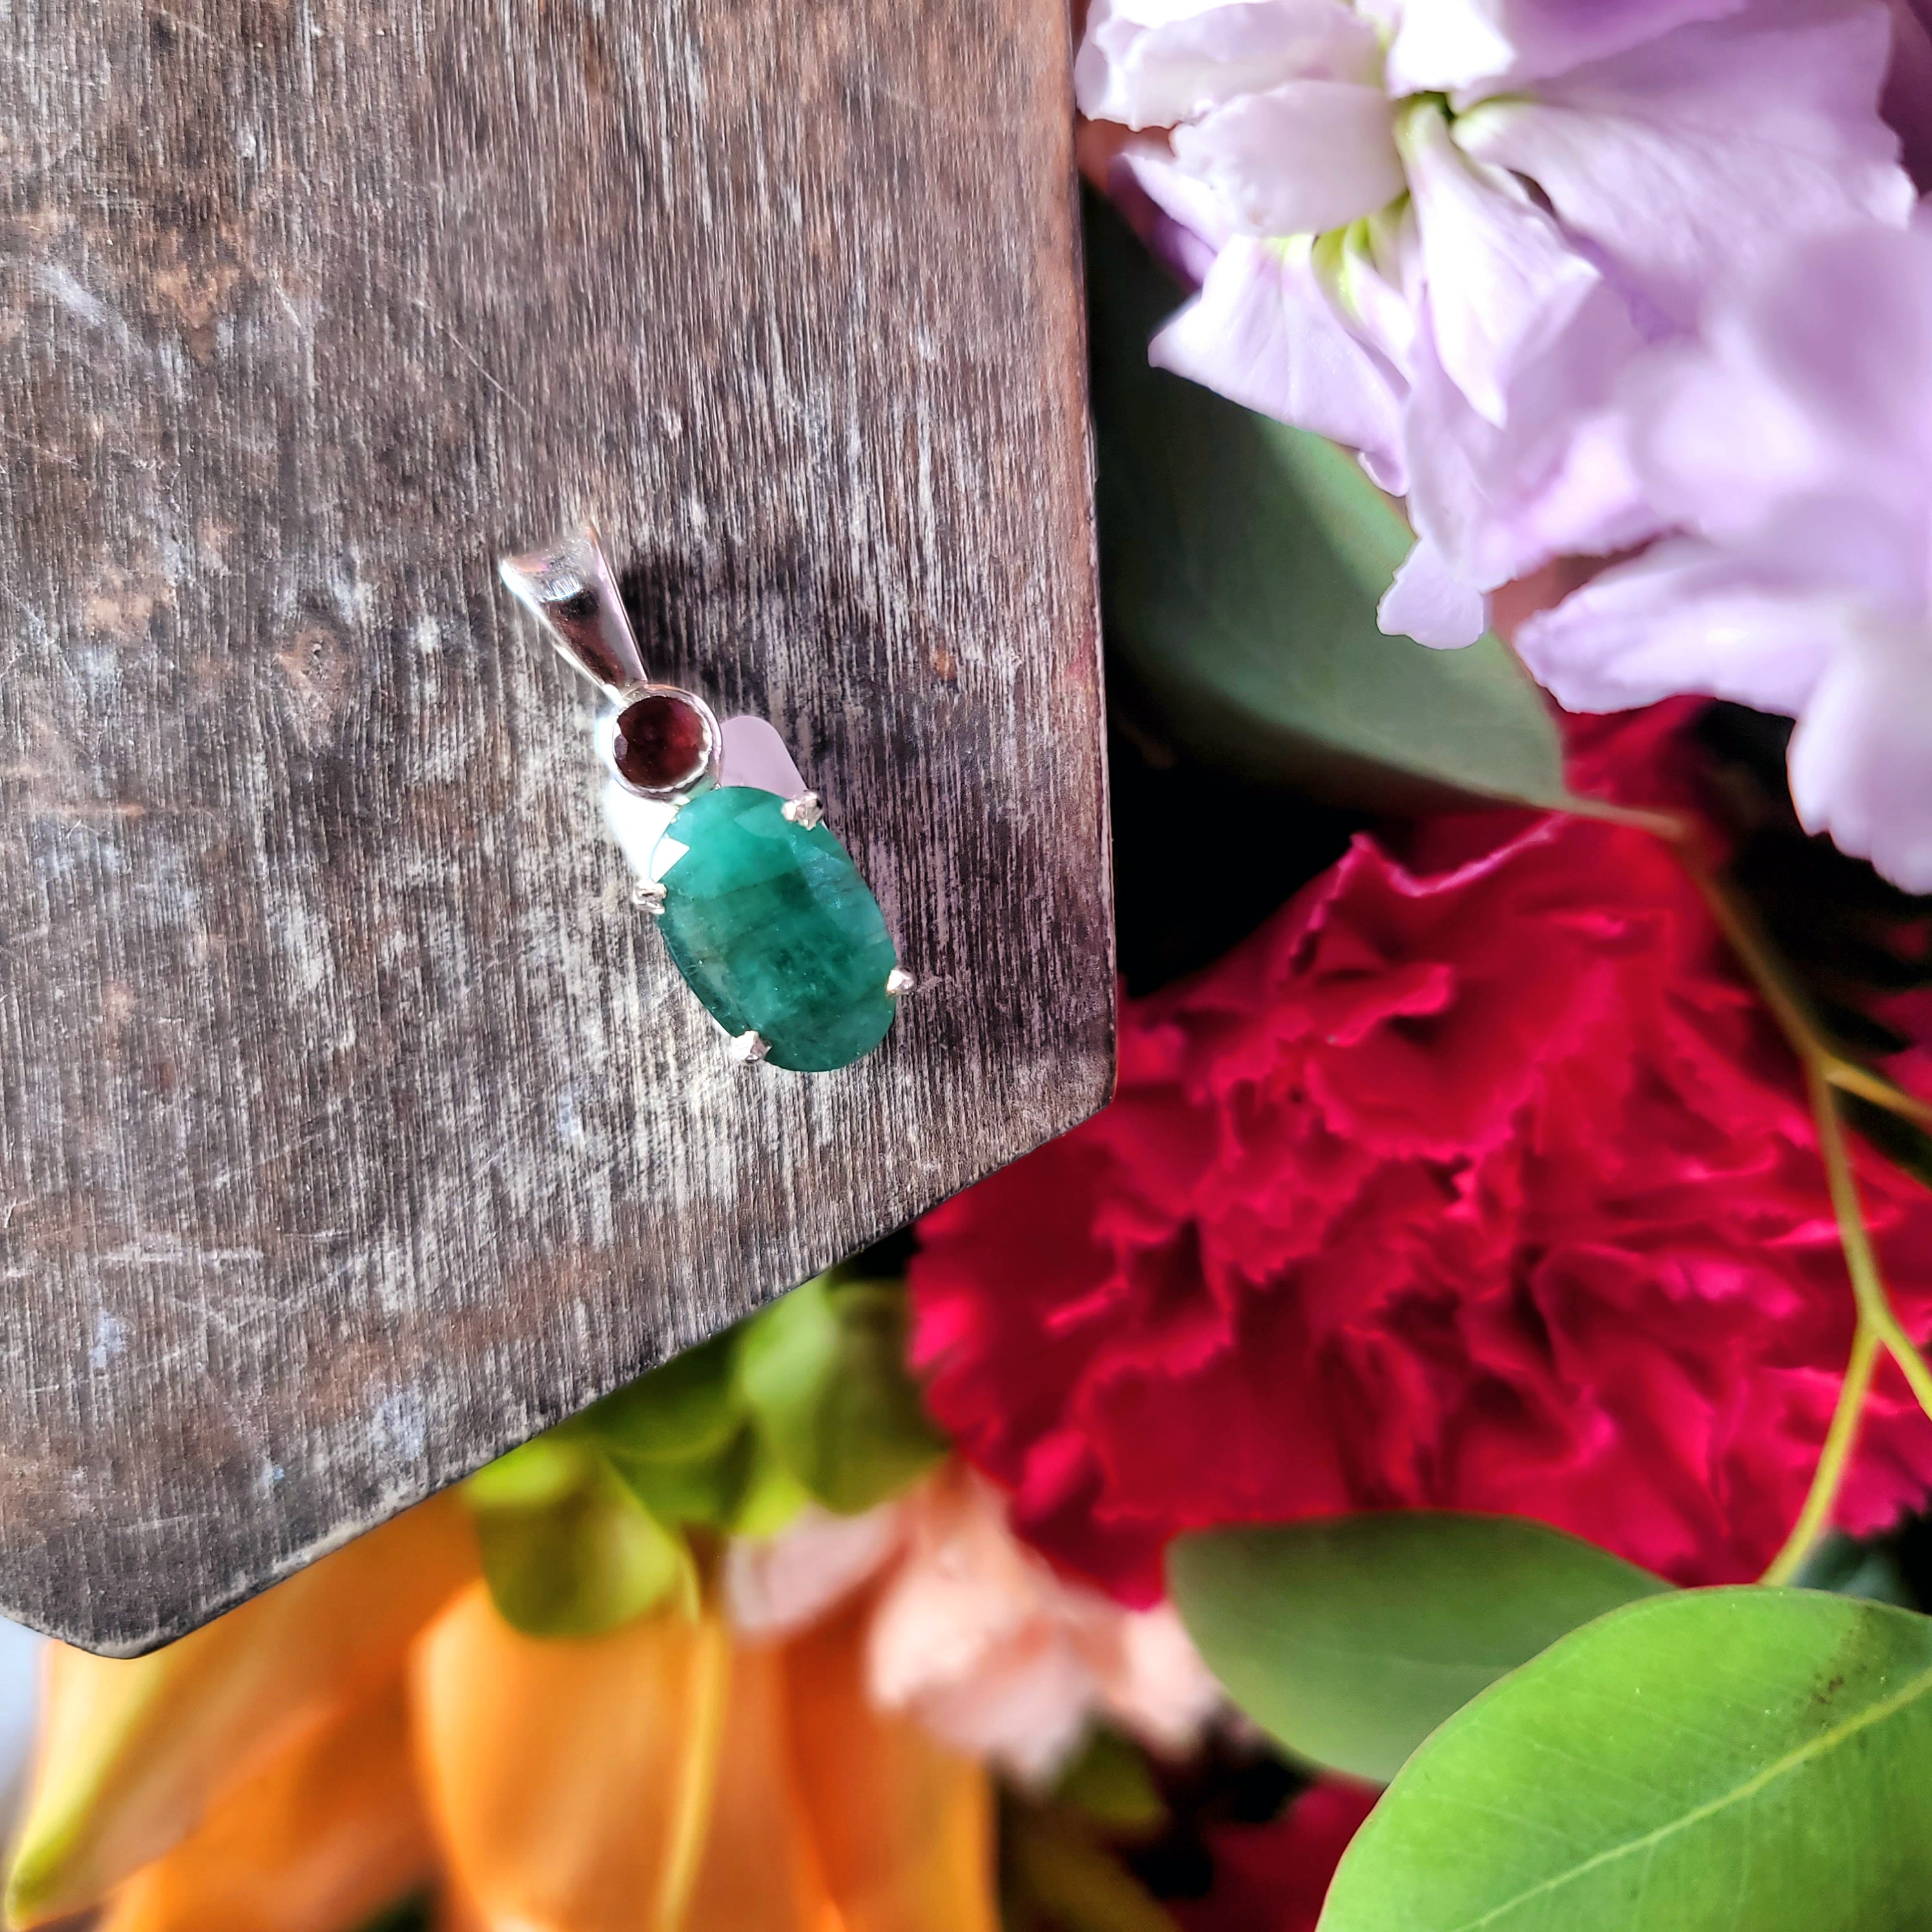 Emerald x Pink Tourmaline Pendant .925 Silver for Abundance of Joy, Love and Romance